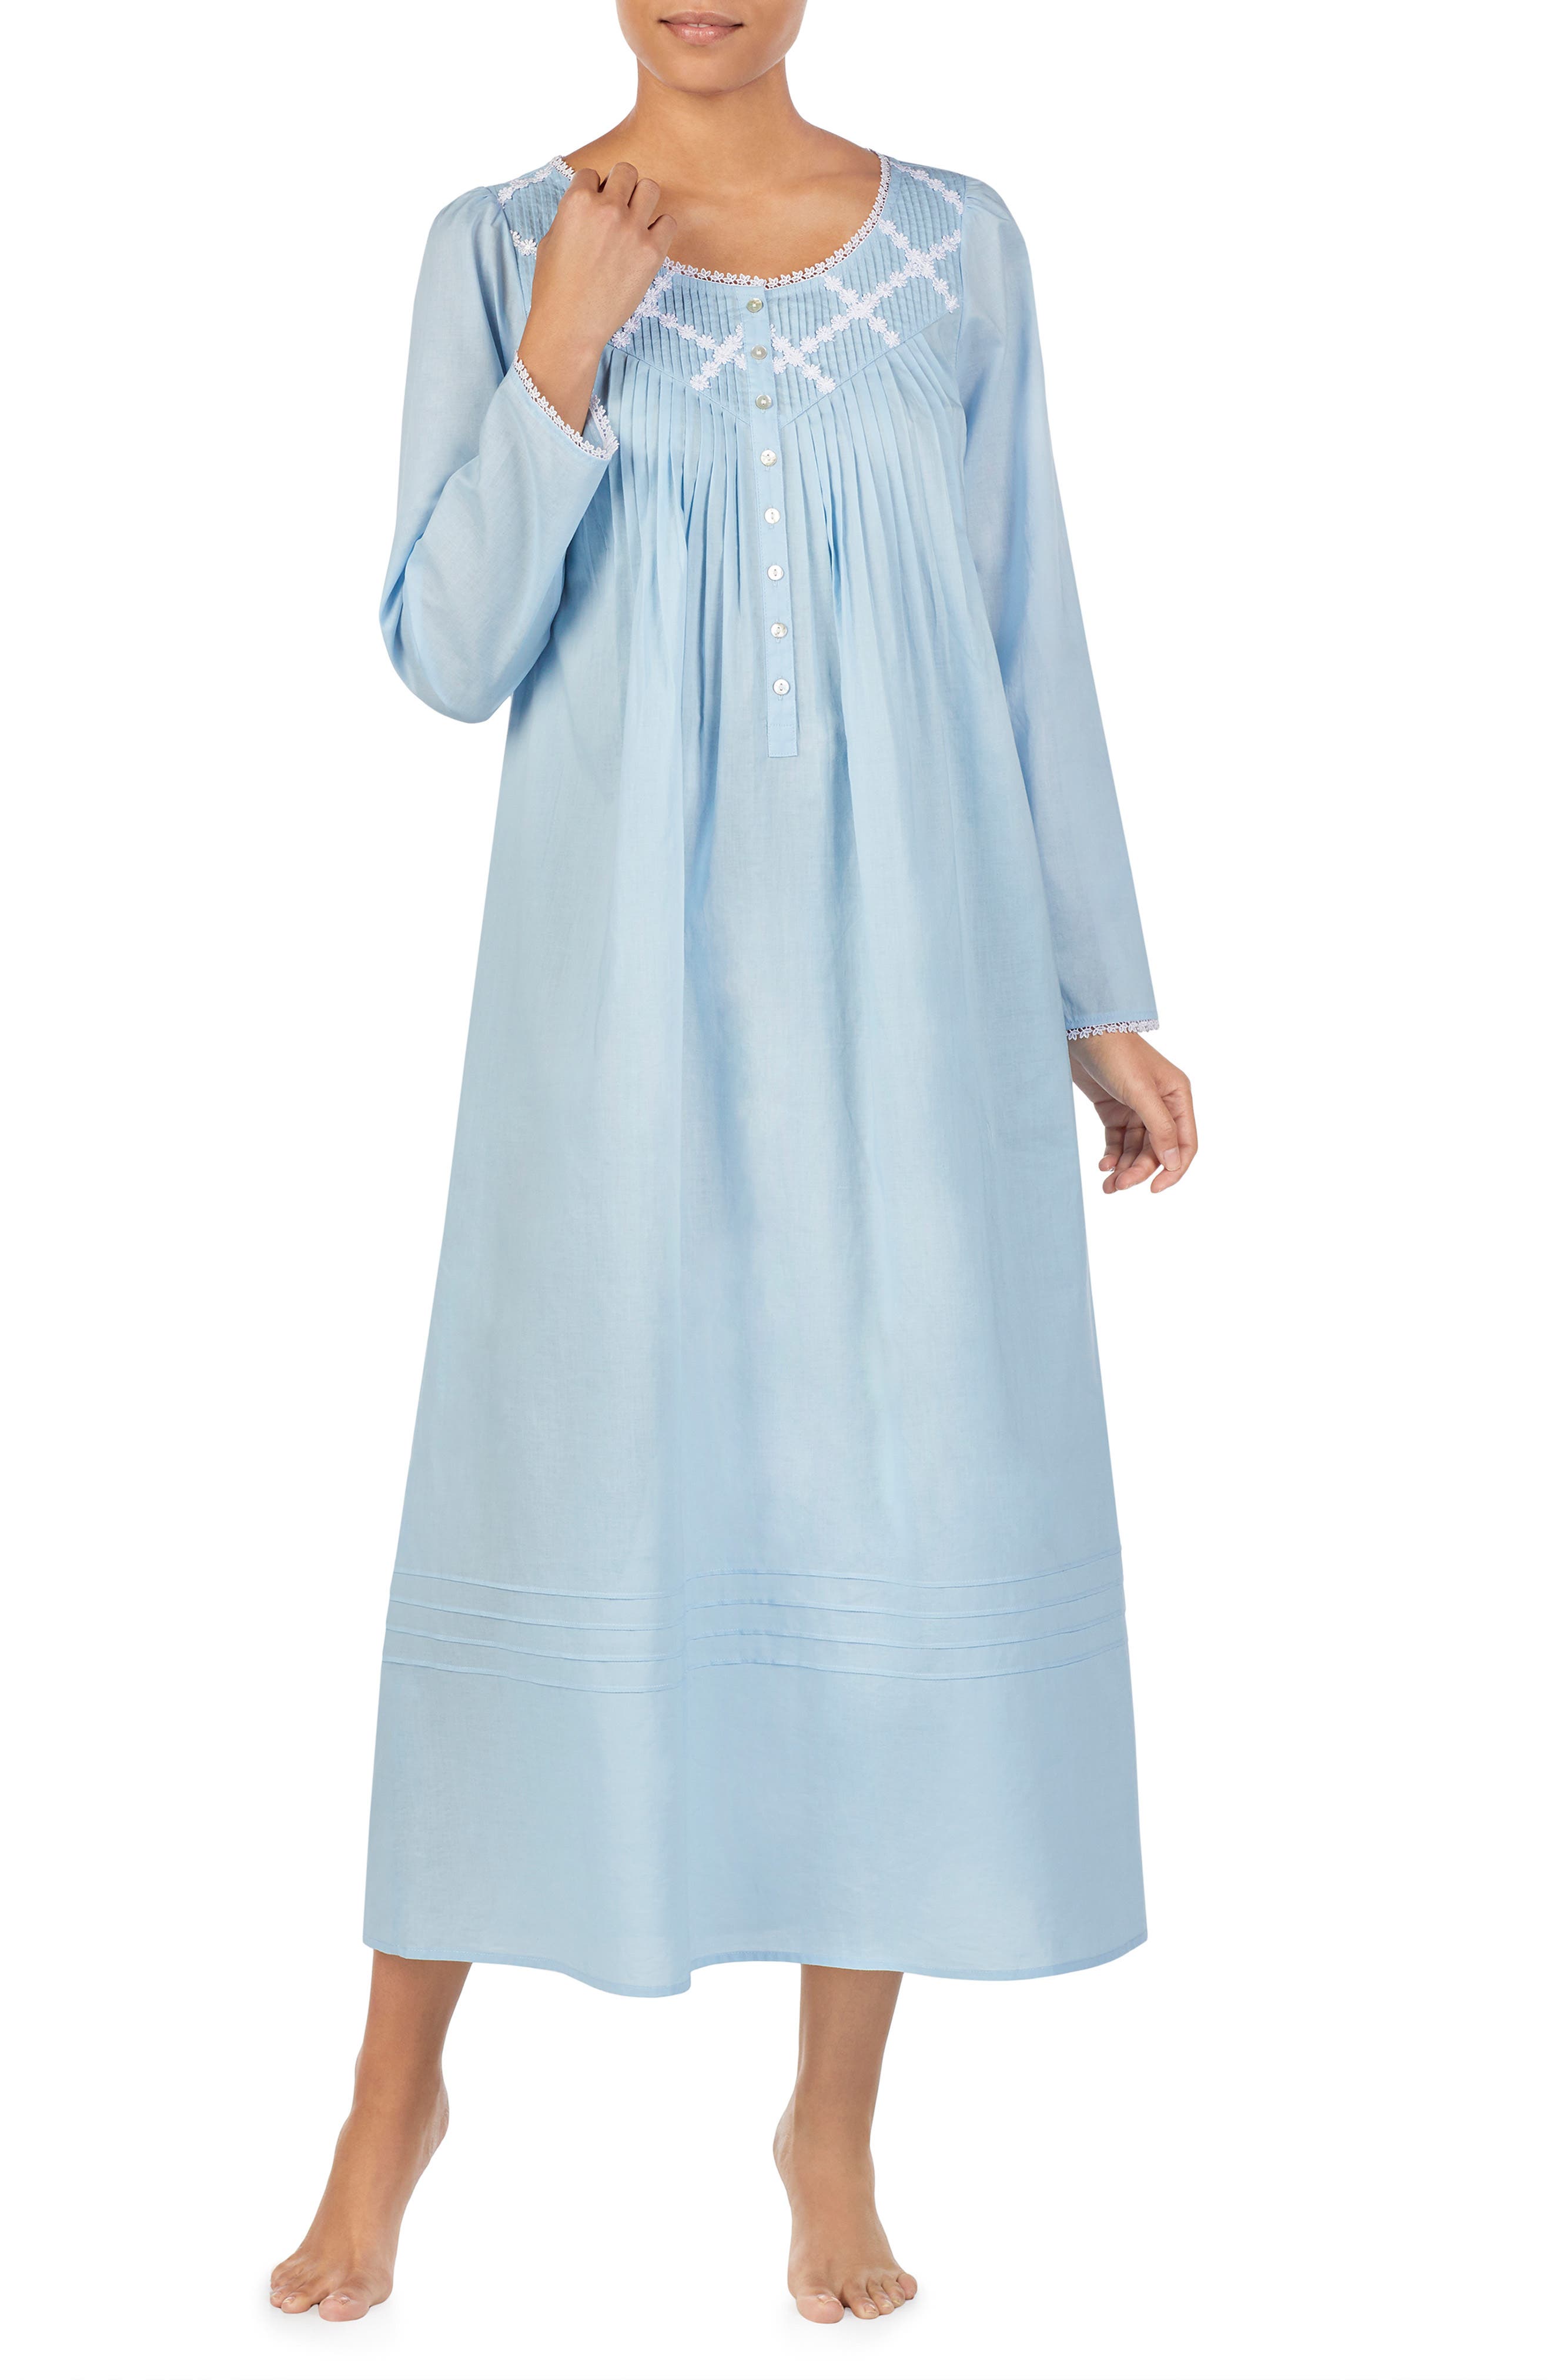 100% Cotton Nightgowns ☀ Nightshirts ...